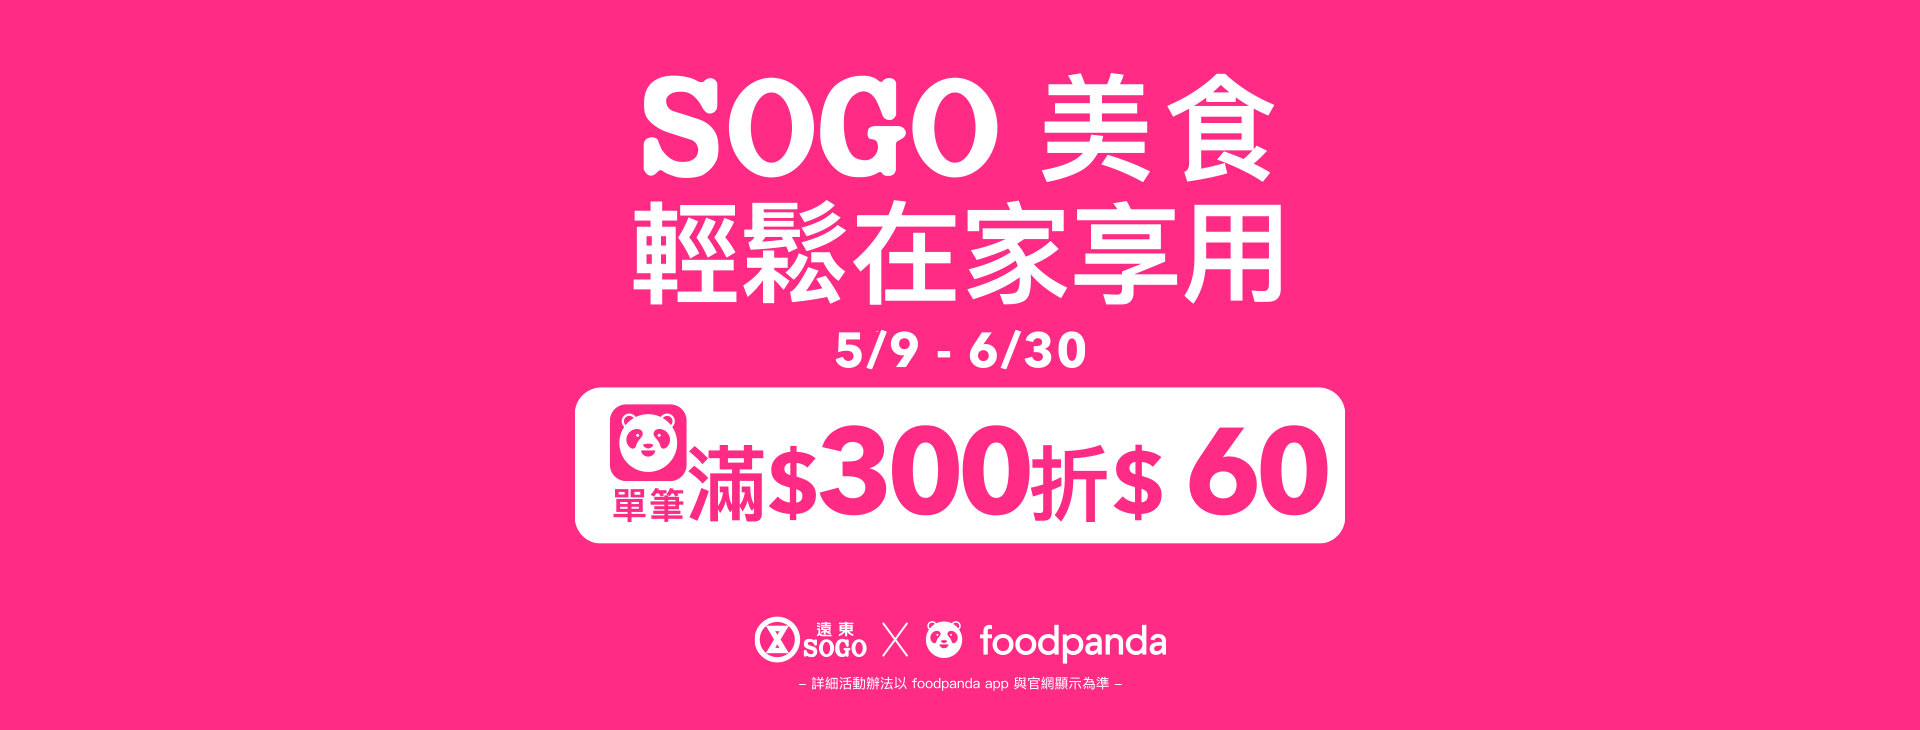 SOGO美食 輕鬆在家享用 滿300元折60元